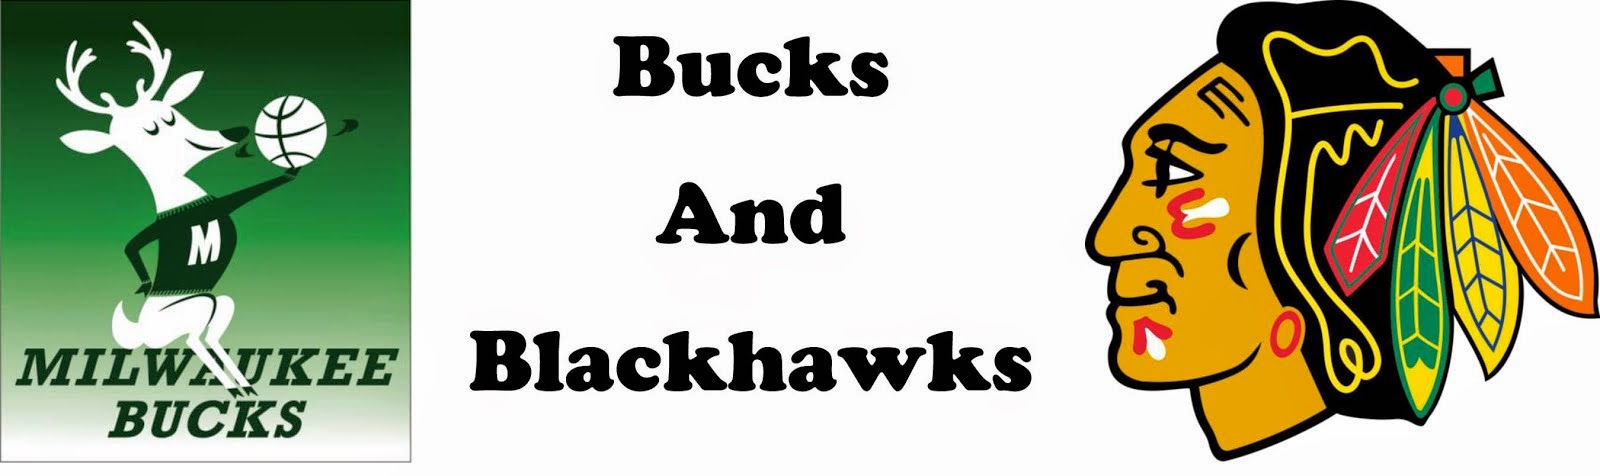 Buck and Blackhawks